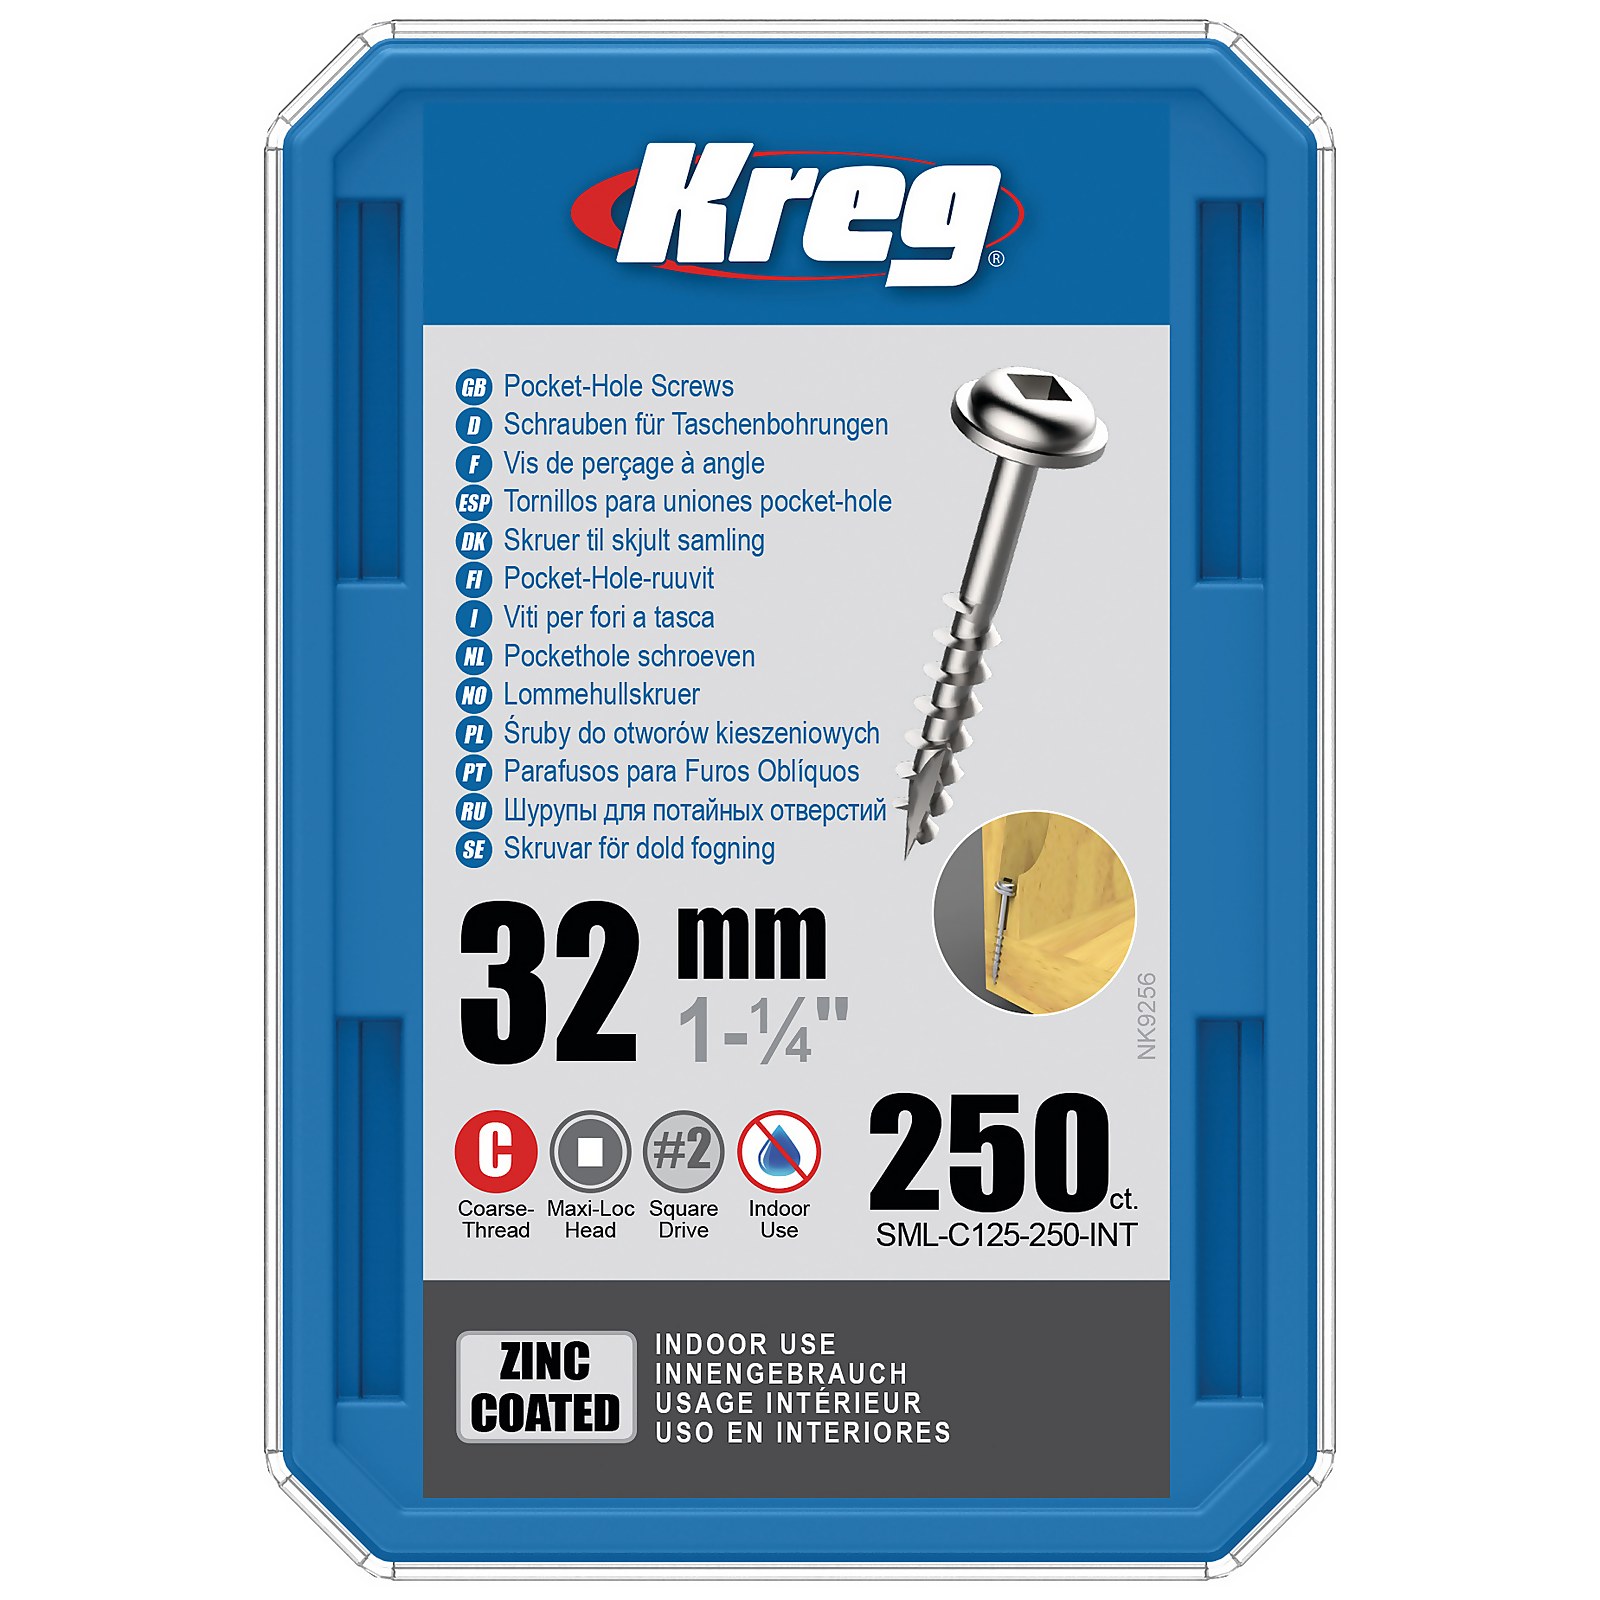 Photo of Kreg Sml-c125-250-eur Zinc Pocket-hole Screws - 32mm / 1.25 - #8 Coarse-thread- Maxi-loc - 250 Pack